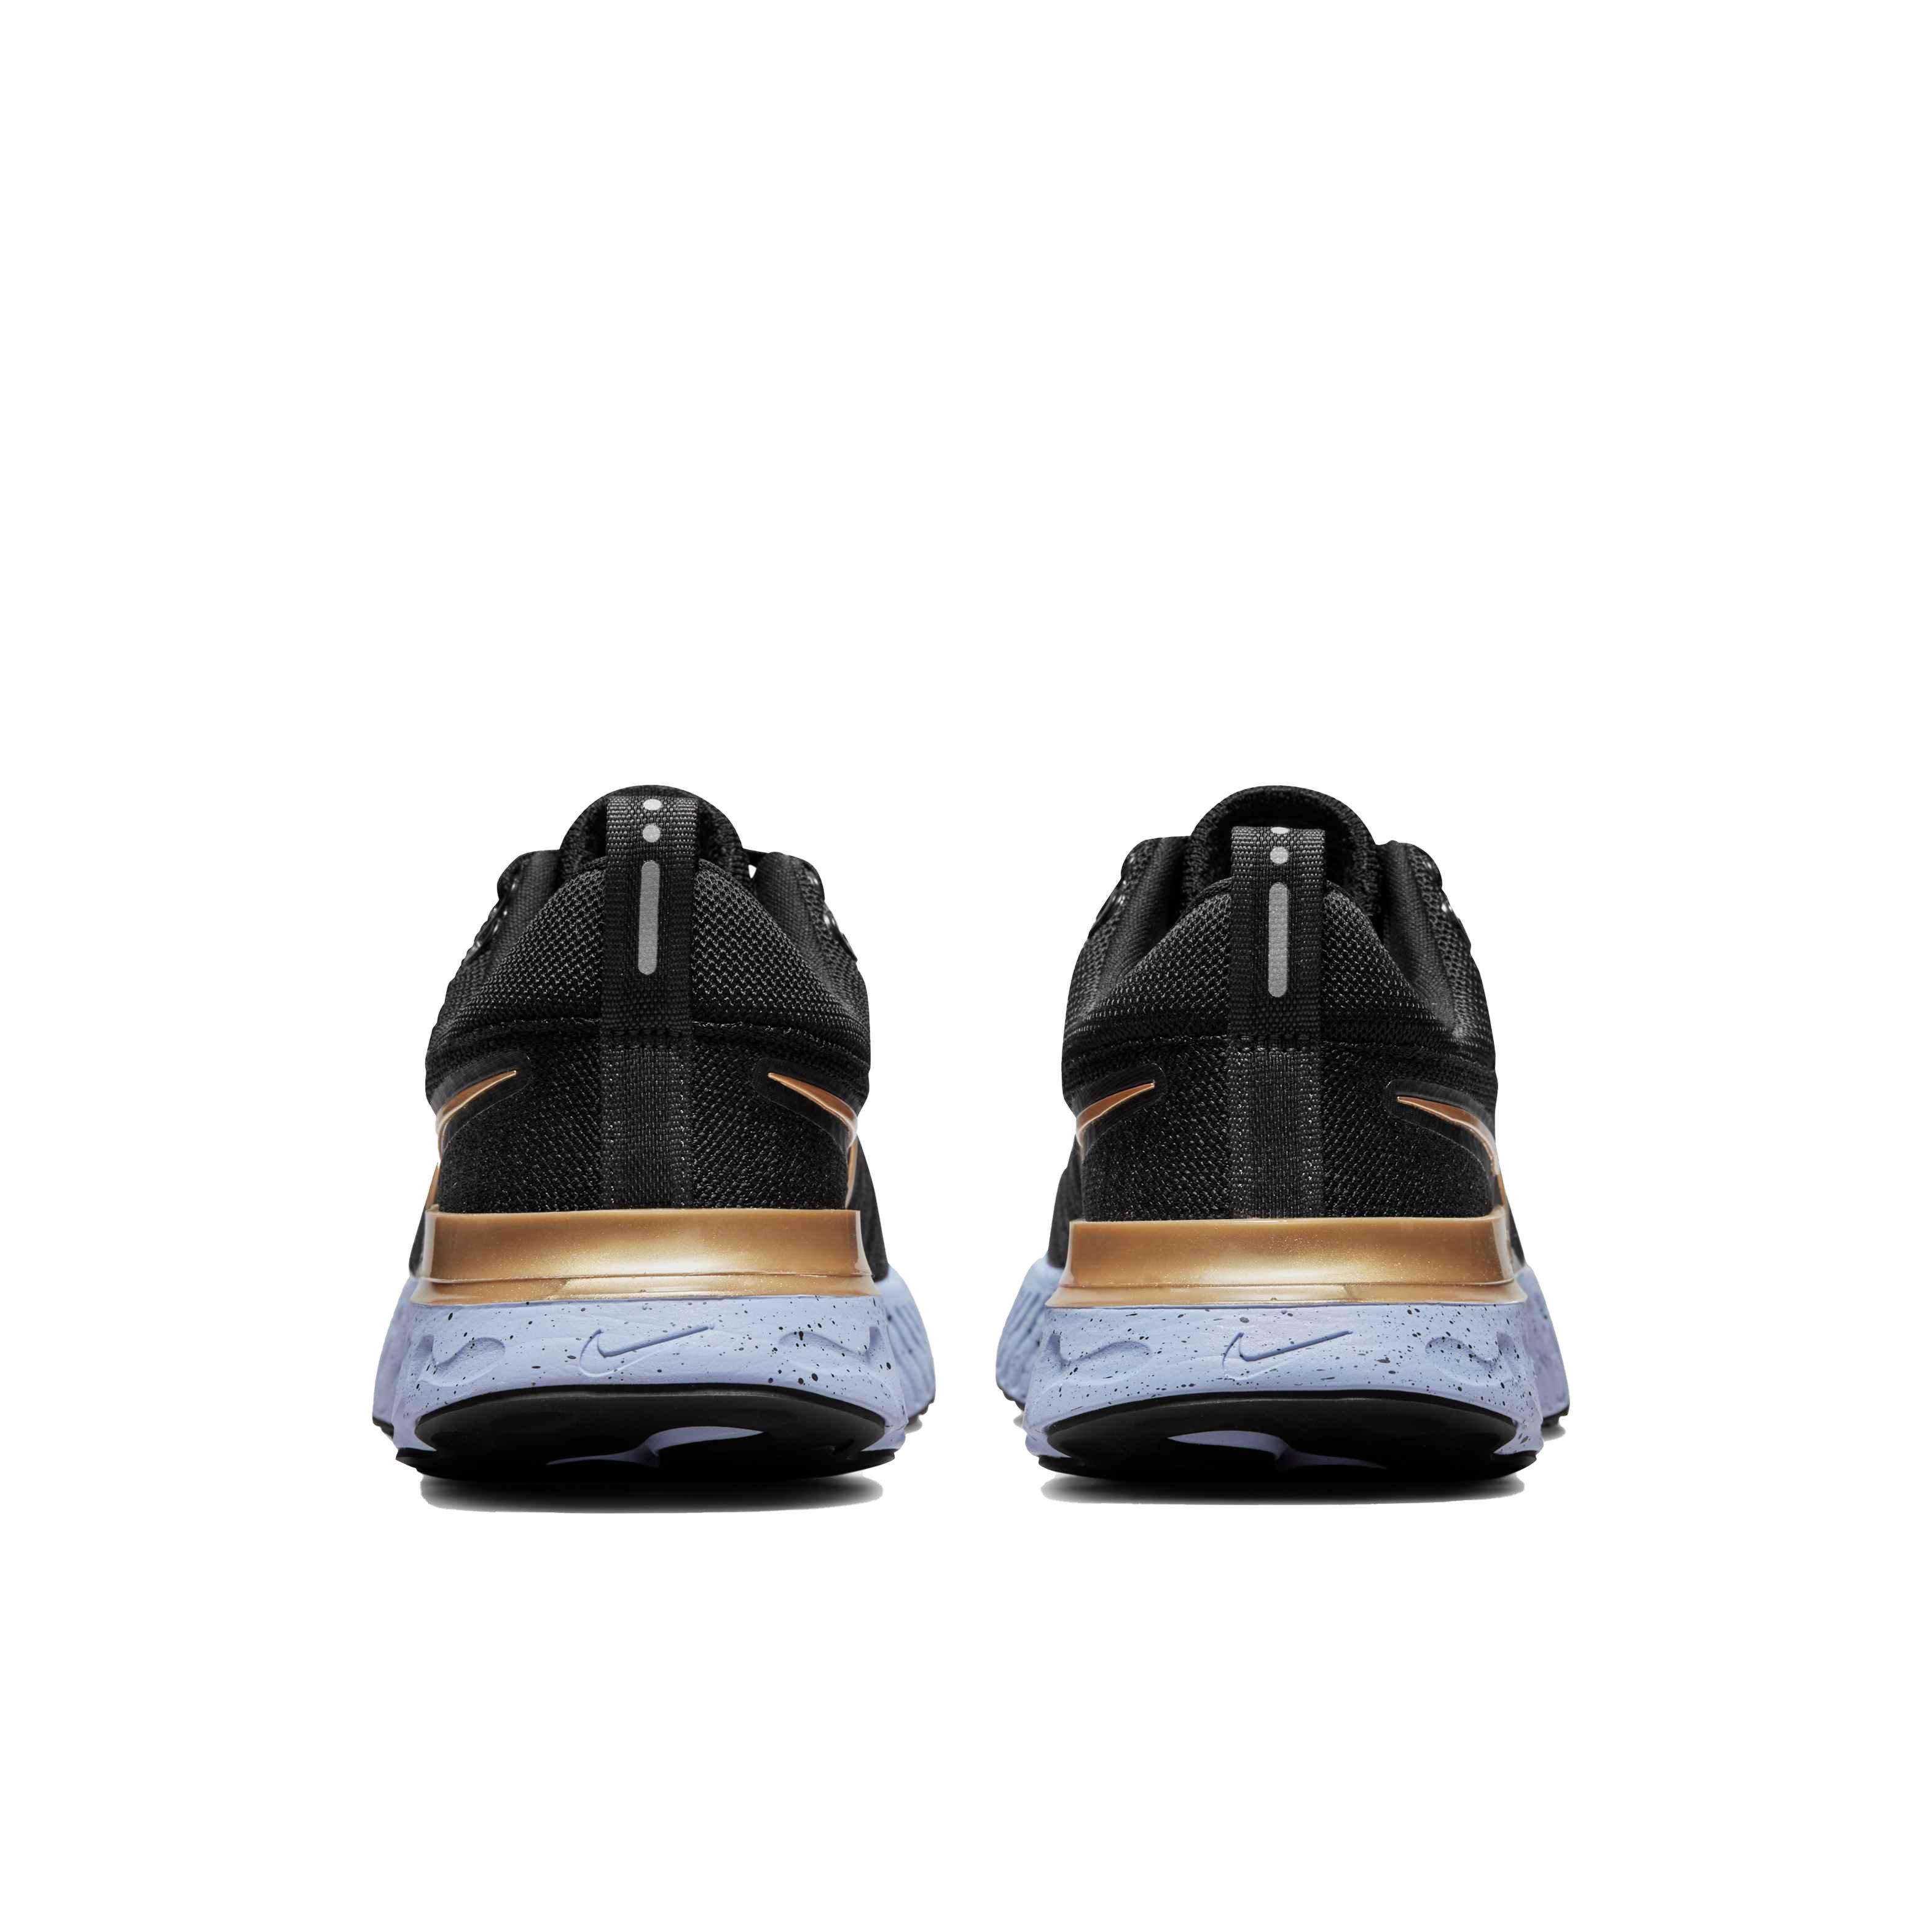 Nike React Infinity 2 "Black/Metallic Gold/Ghost/Dark Smoke Grey" Shoe